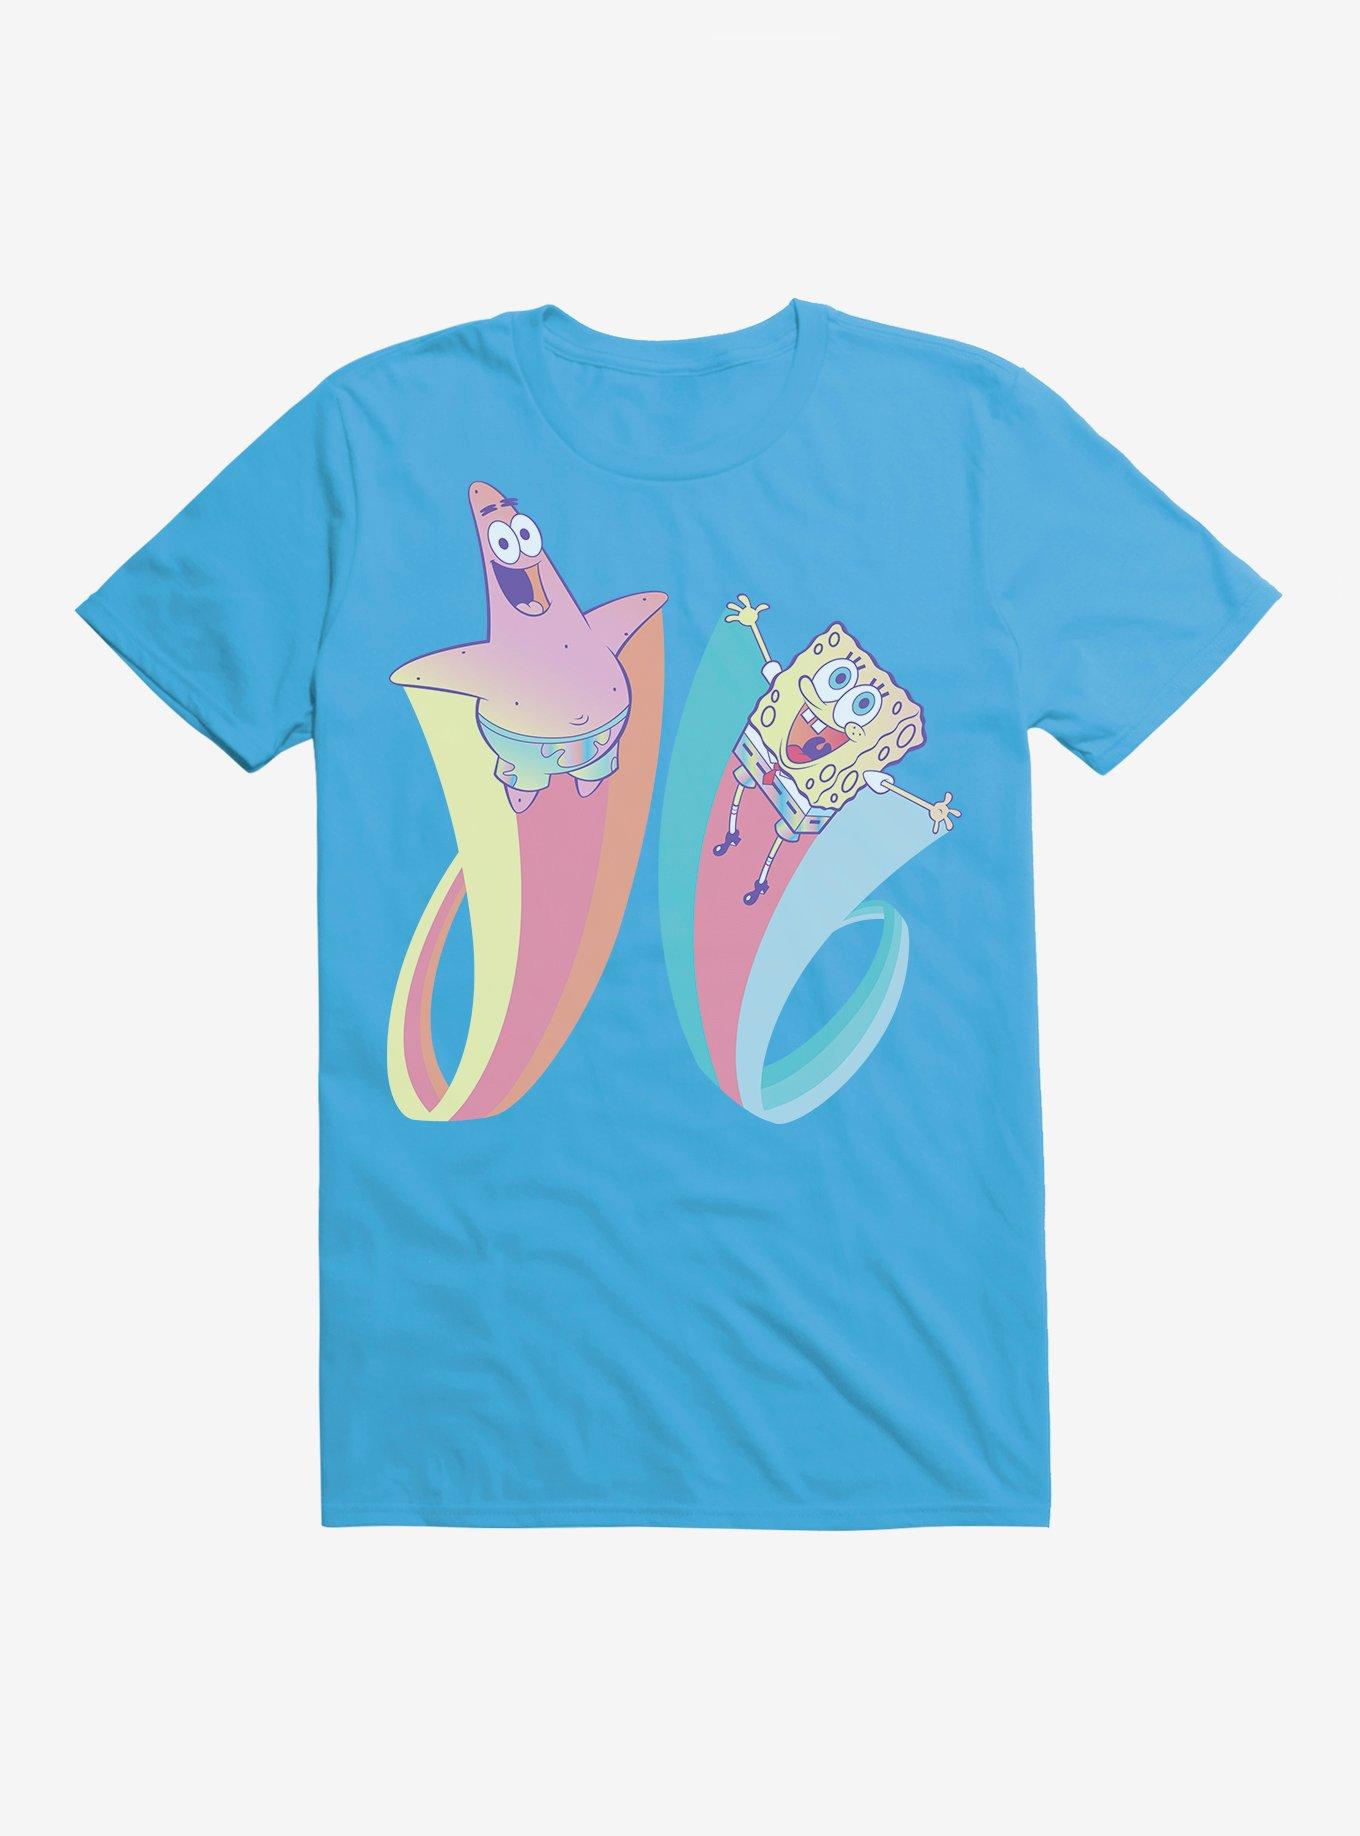 SpongeBob SquarePants Patrick Rainbow Jump T-Shirt, , hi-res